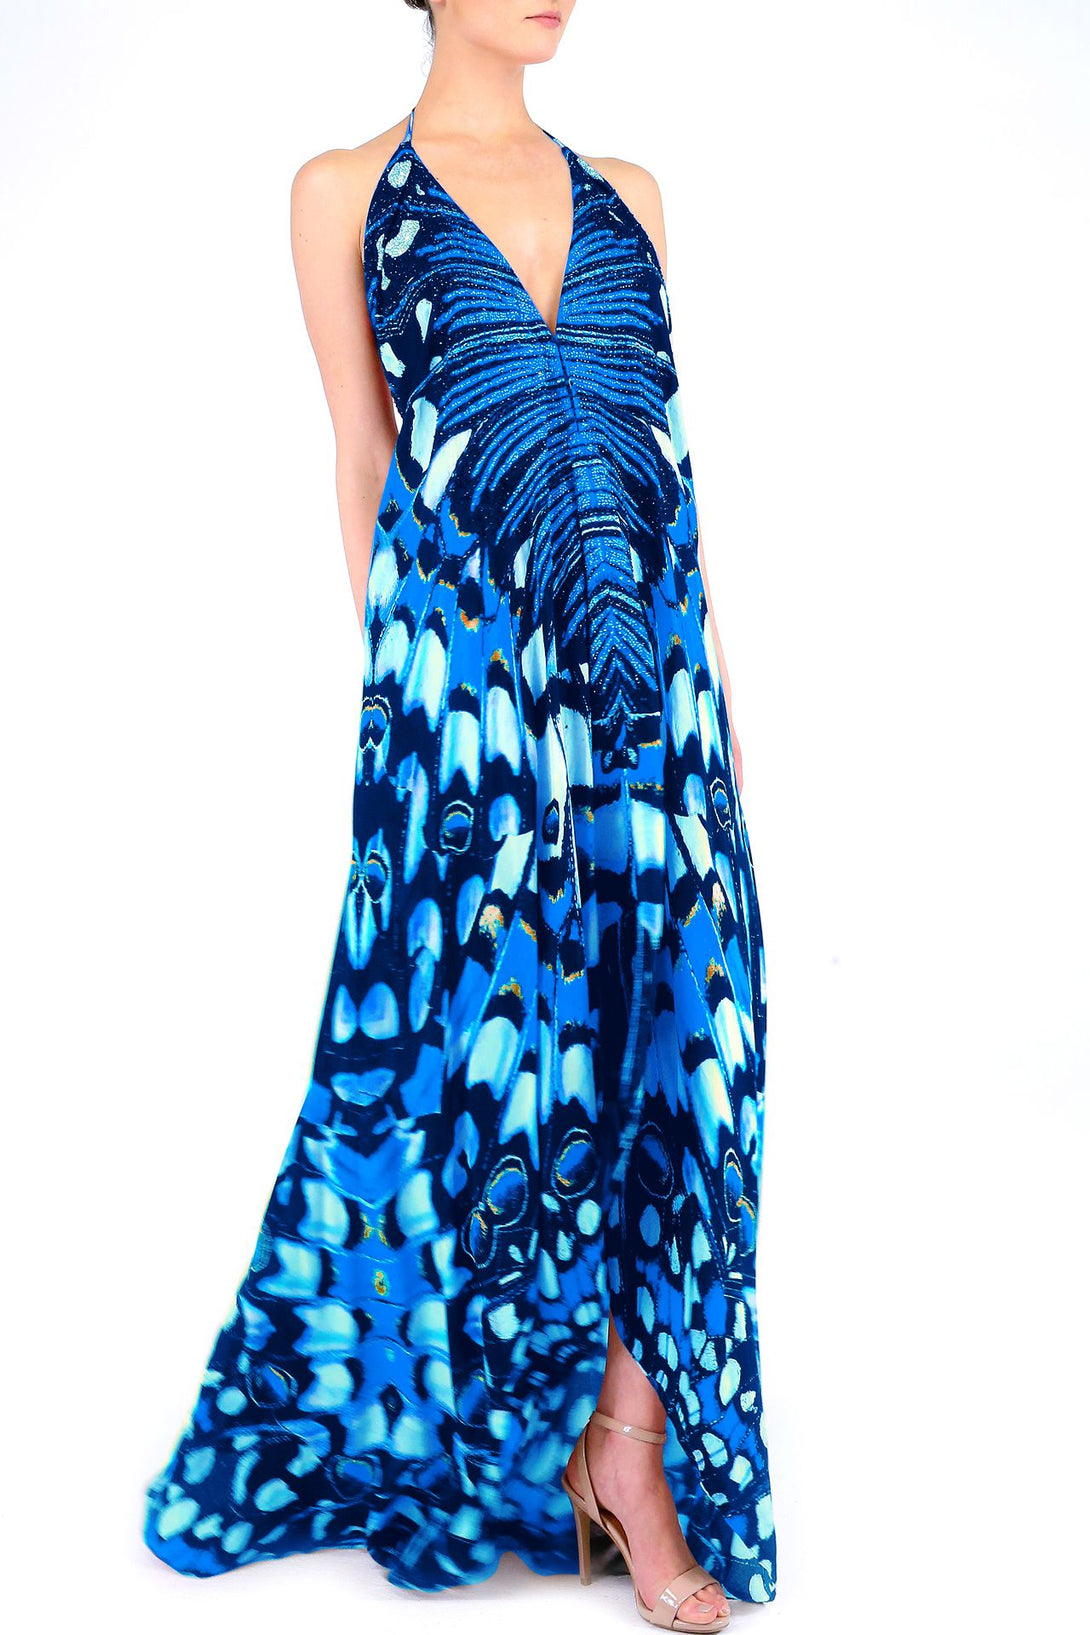   blue formal dresses long, long summer dresses for women, plunge neck cocktail dress, Shahida Parides,